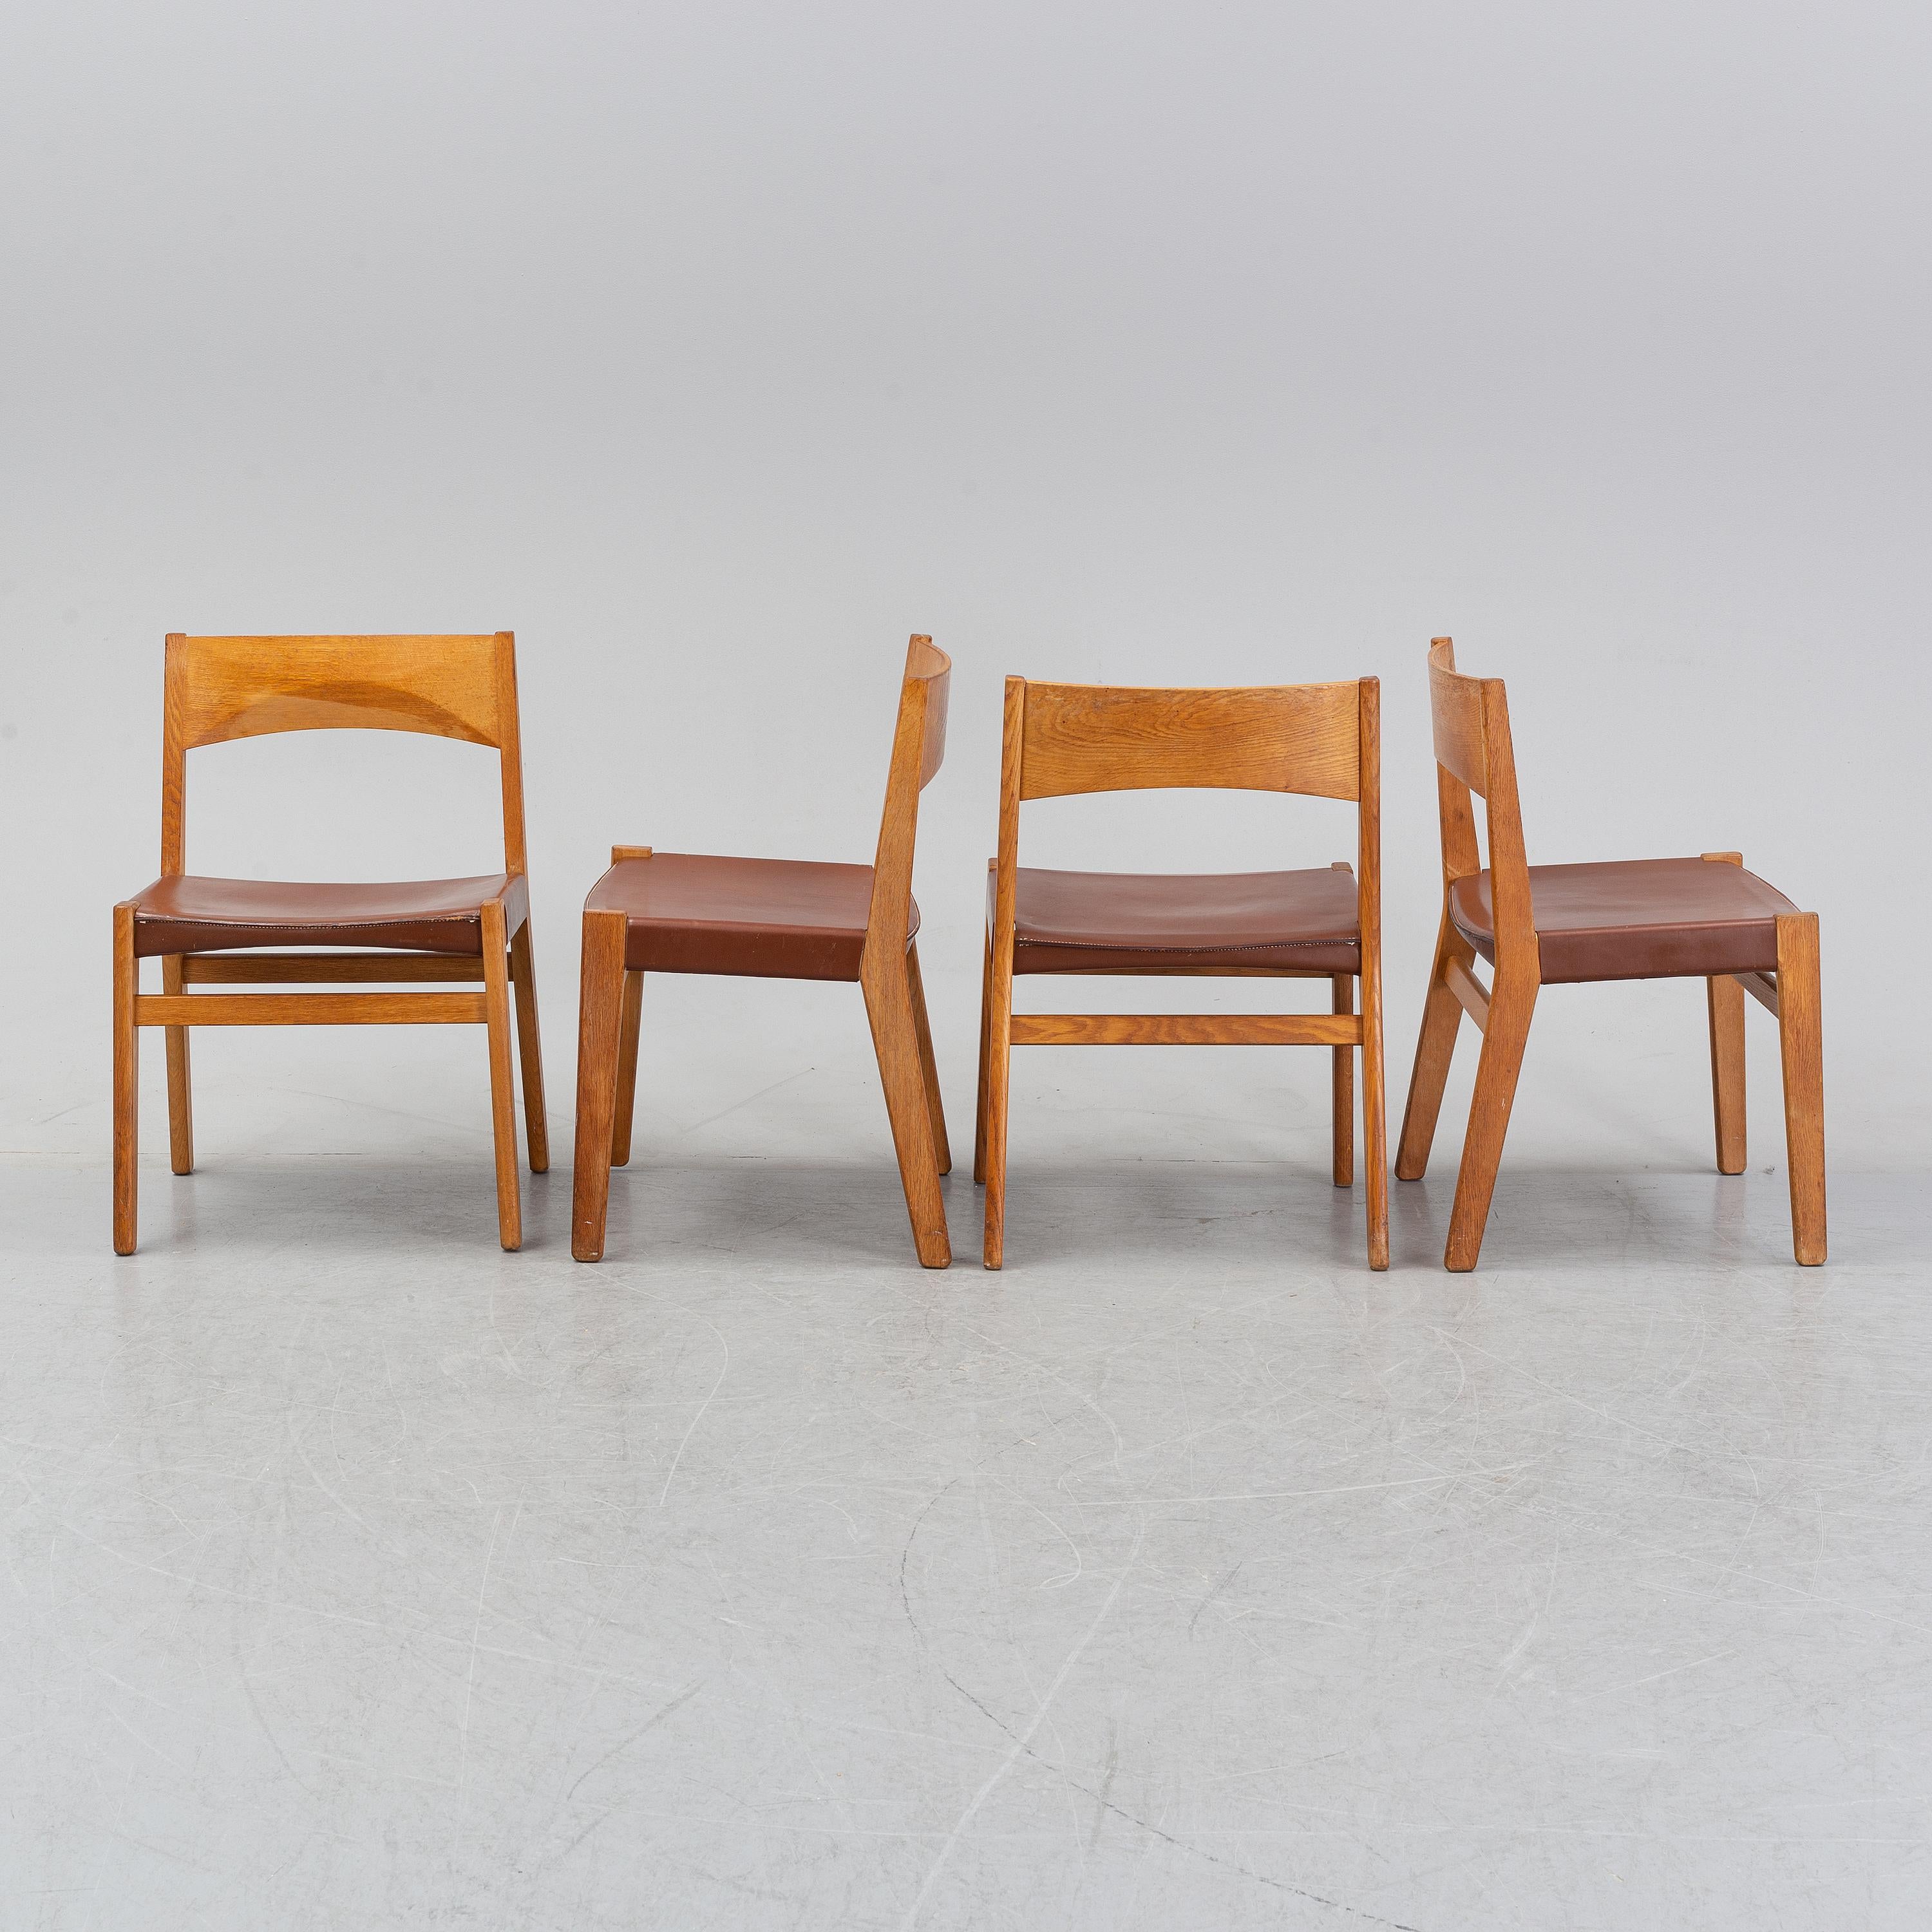 John Vedel-Rieper for Erhard Rasmussen, set of 4 dining chairs, oak, leather, made in  Denmark around 1957.
good condition, wear due to age
Danish designer John Vedel-Rieper created this dining chair in 1957 for Erhard Rasmussen.